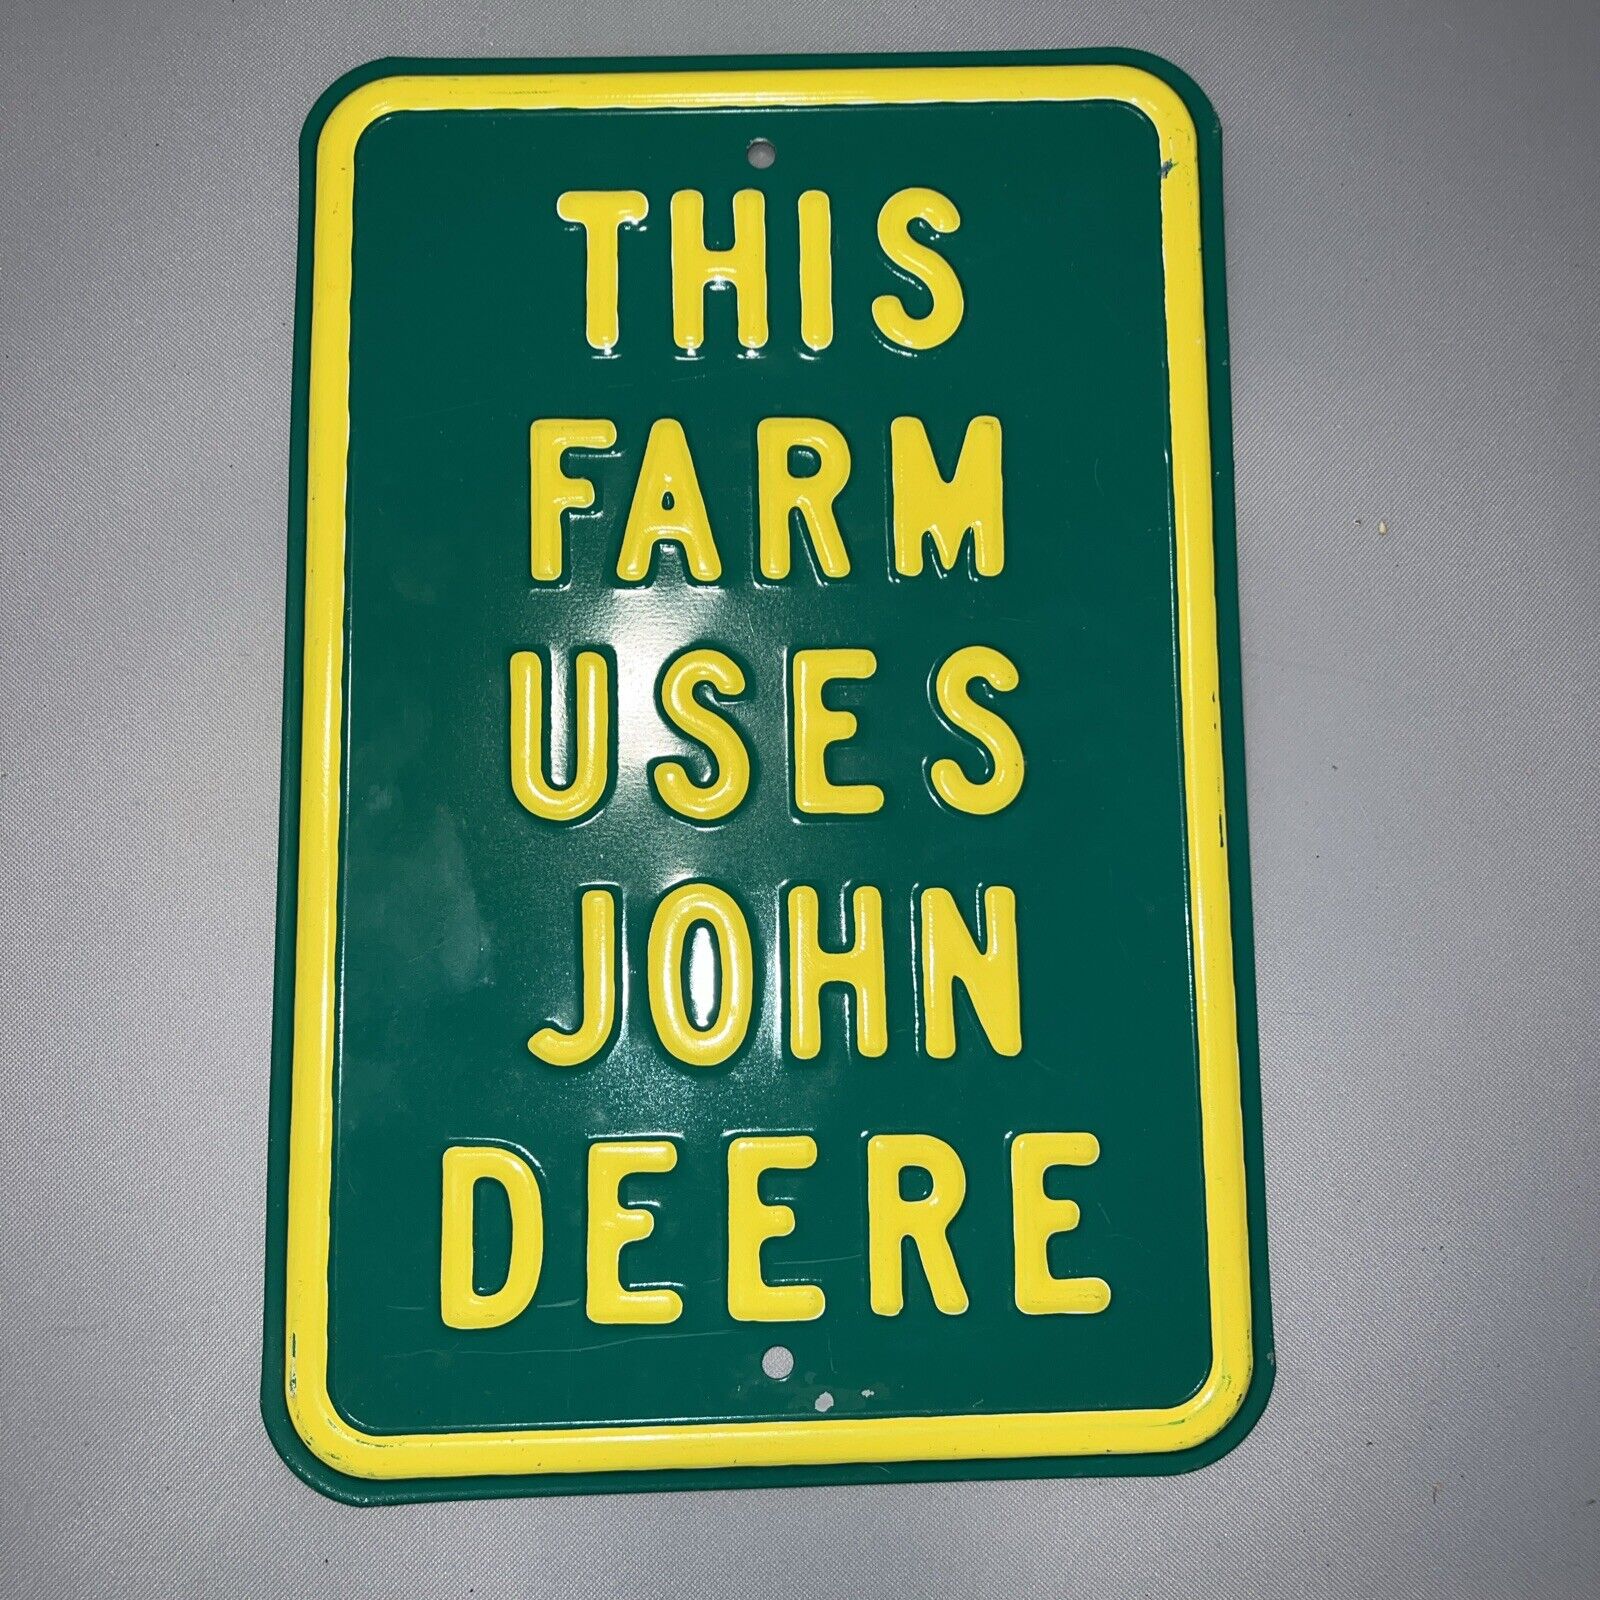 HEAVY METAL JOHN DEERE SIGN, THIS FARM USES JOHN DEERE